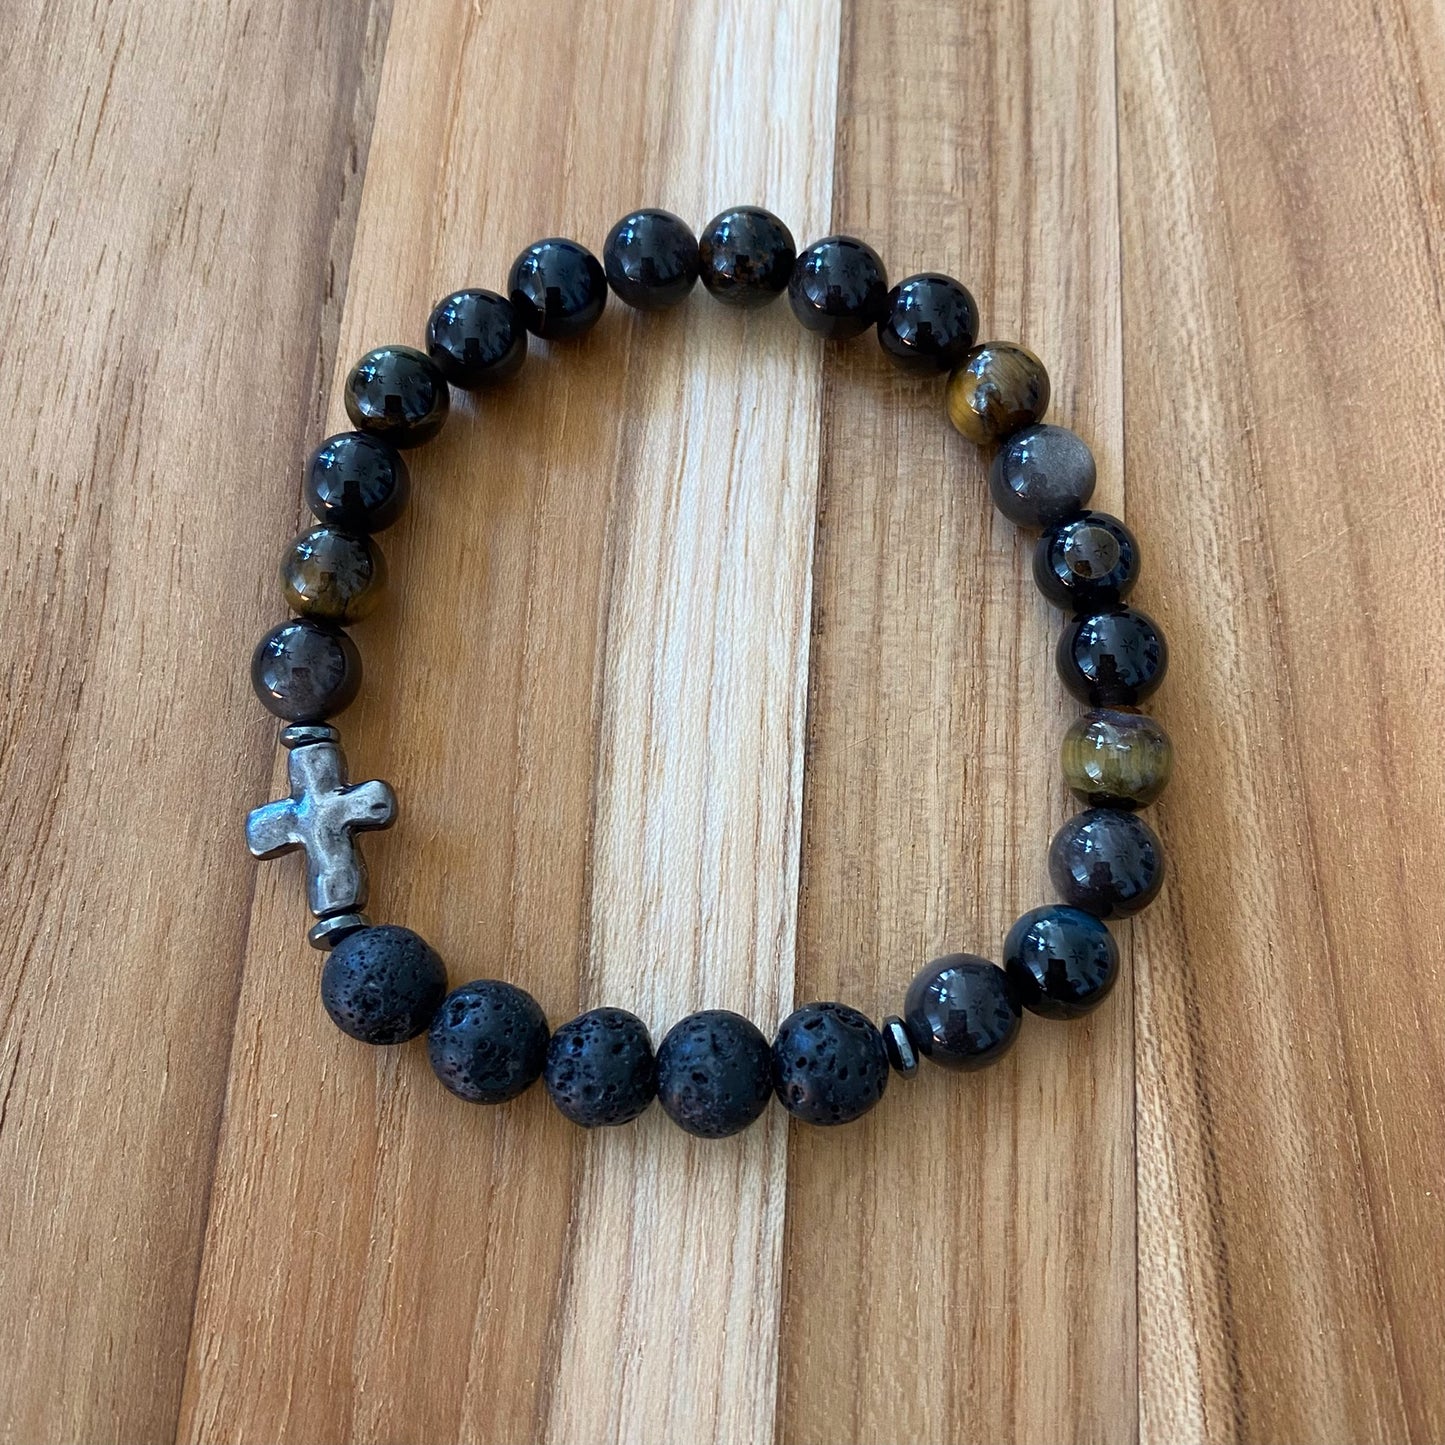 Unisex Aromatherapy Beaded Stretch Bracelet with Tigereye & Black Lava Stone Beads